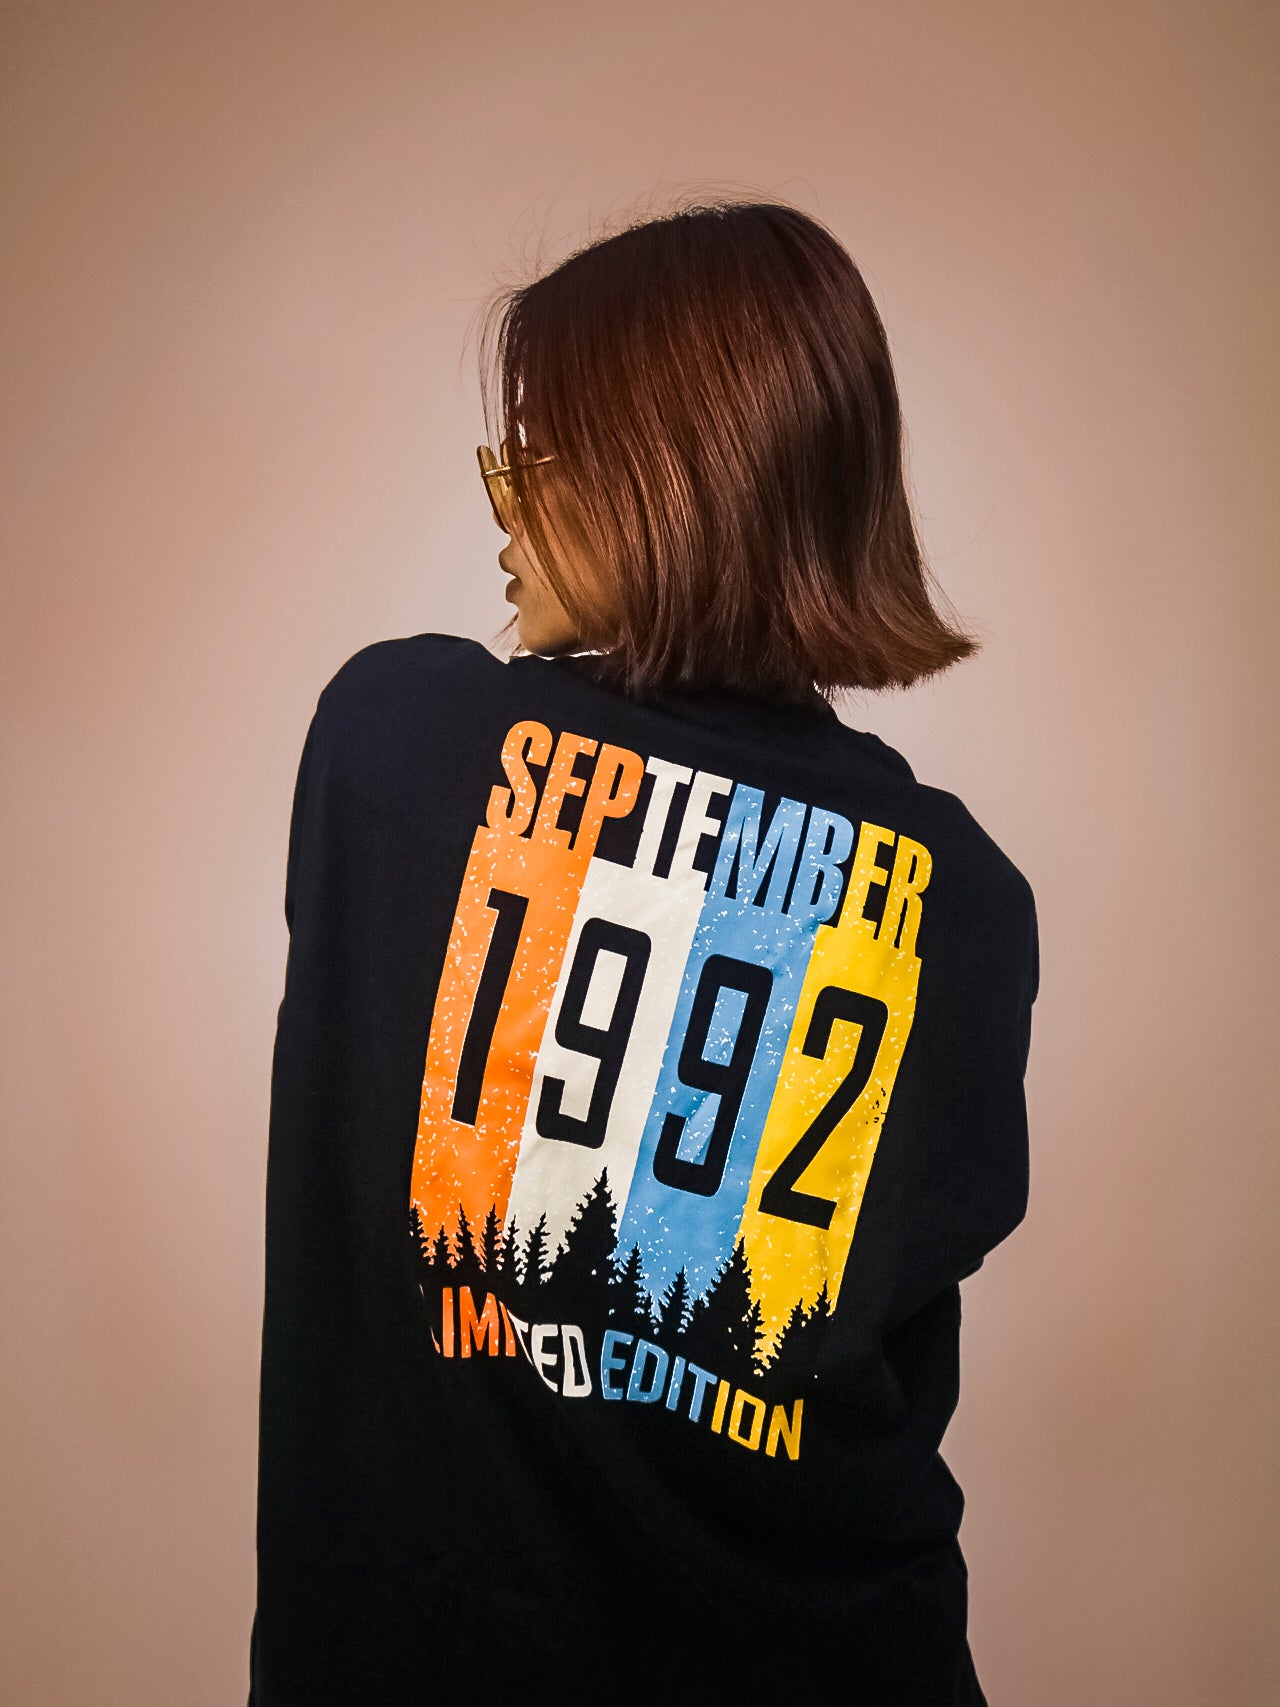 September 1992 Limited Edition Oversized 100% Cotton Vantablack Printed Unisex T-Shirt